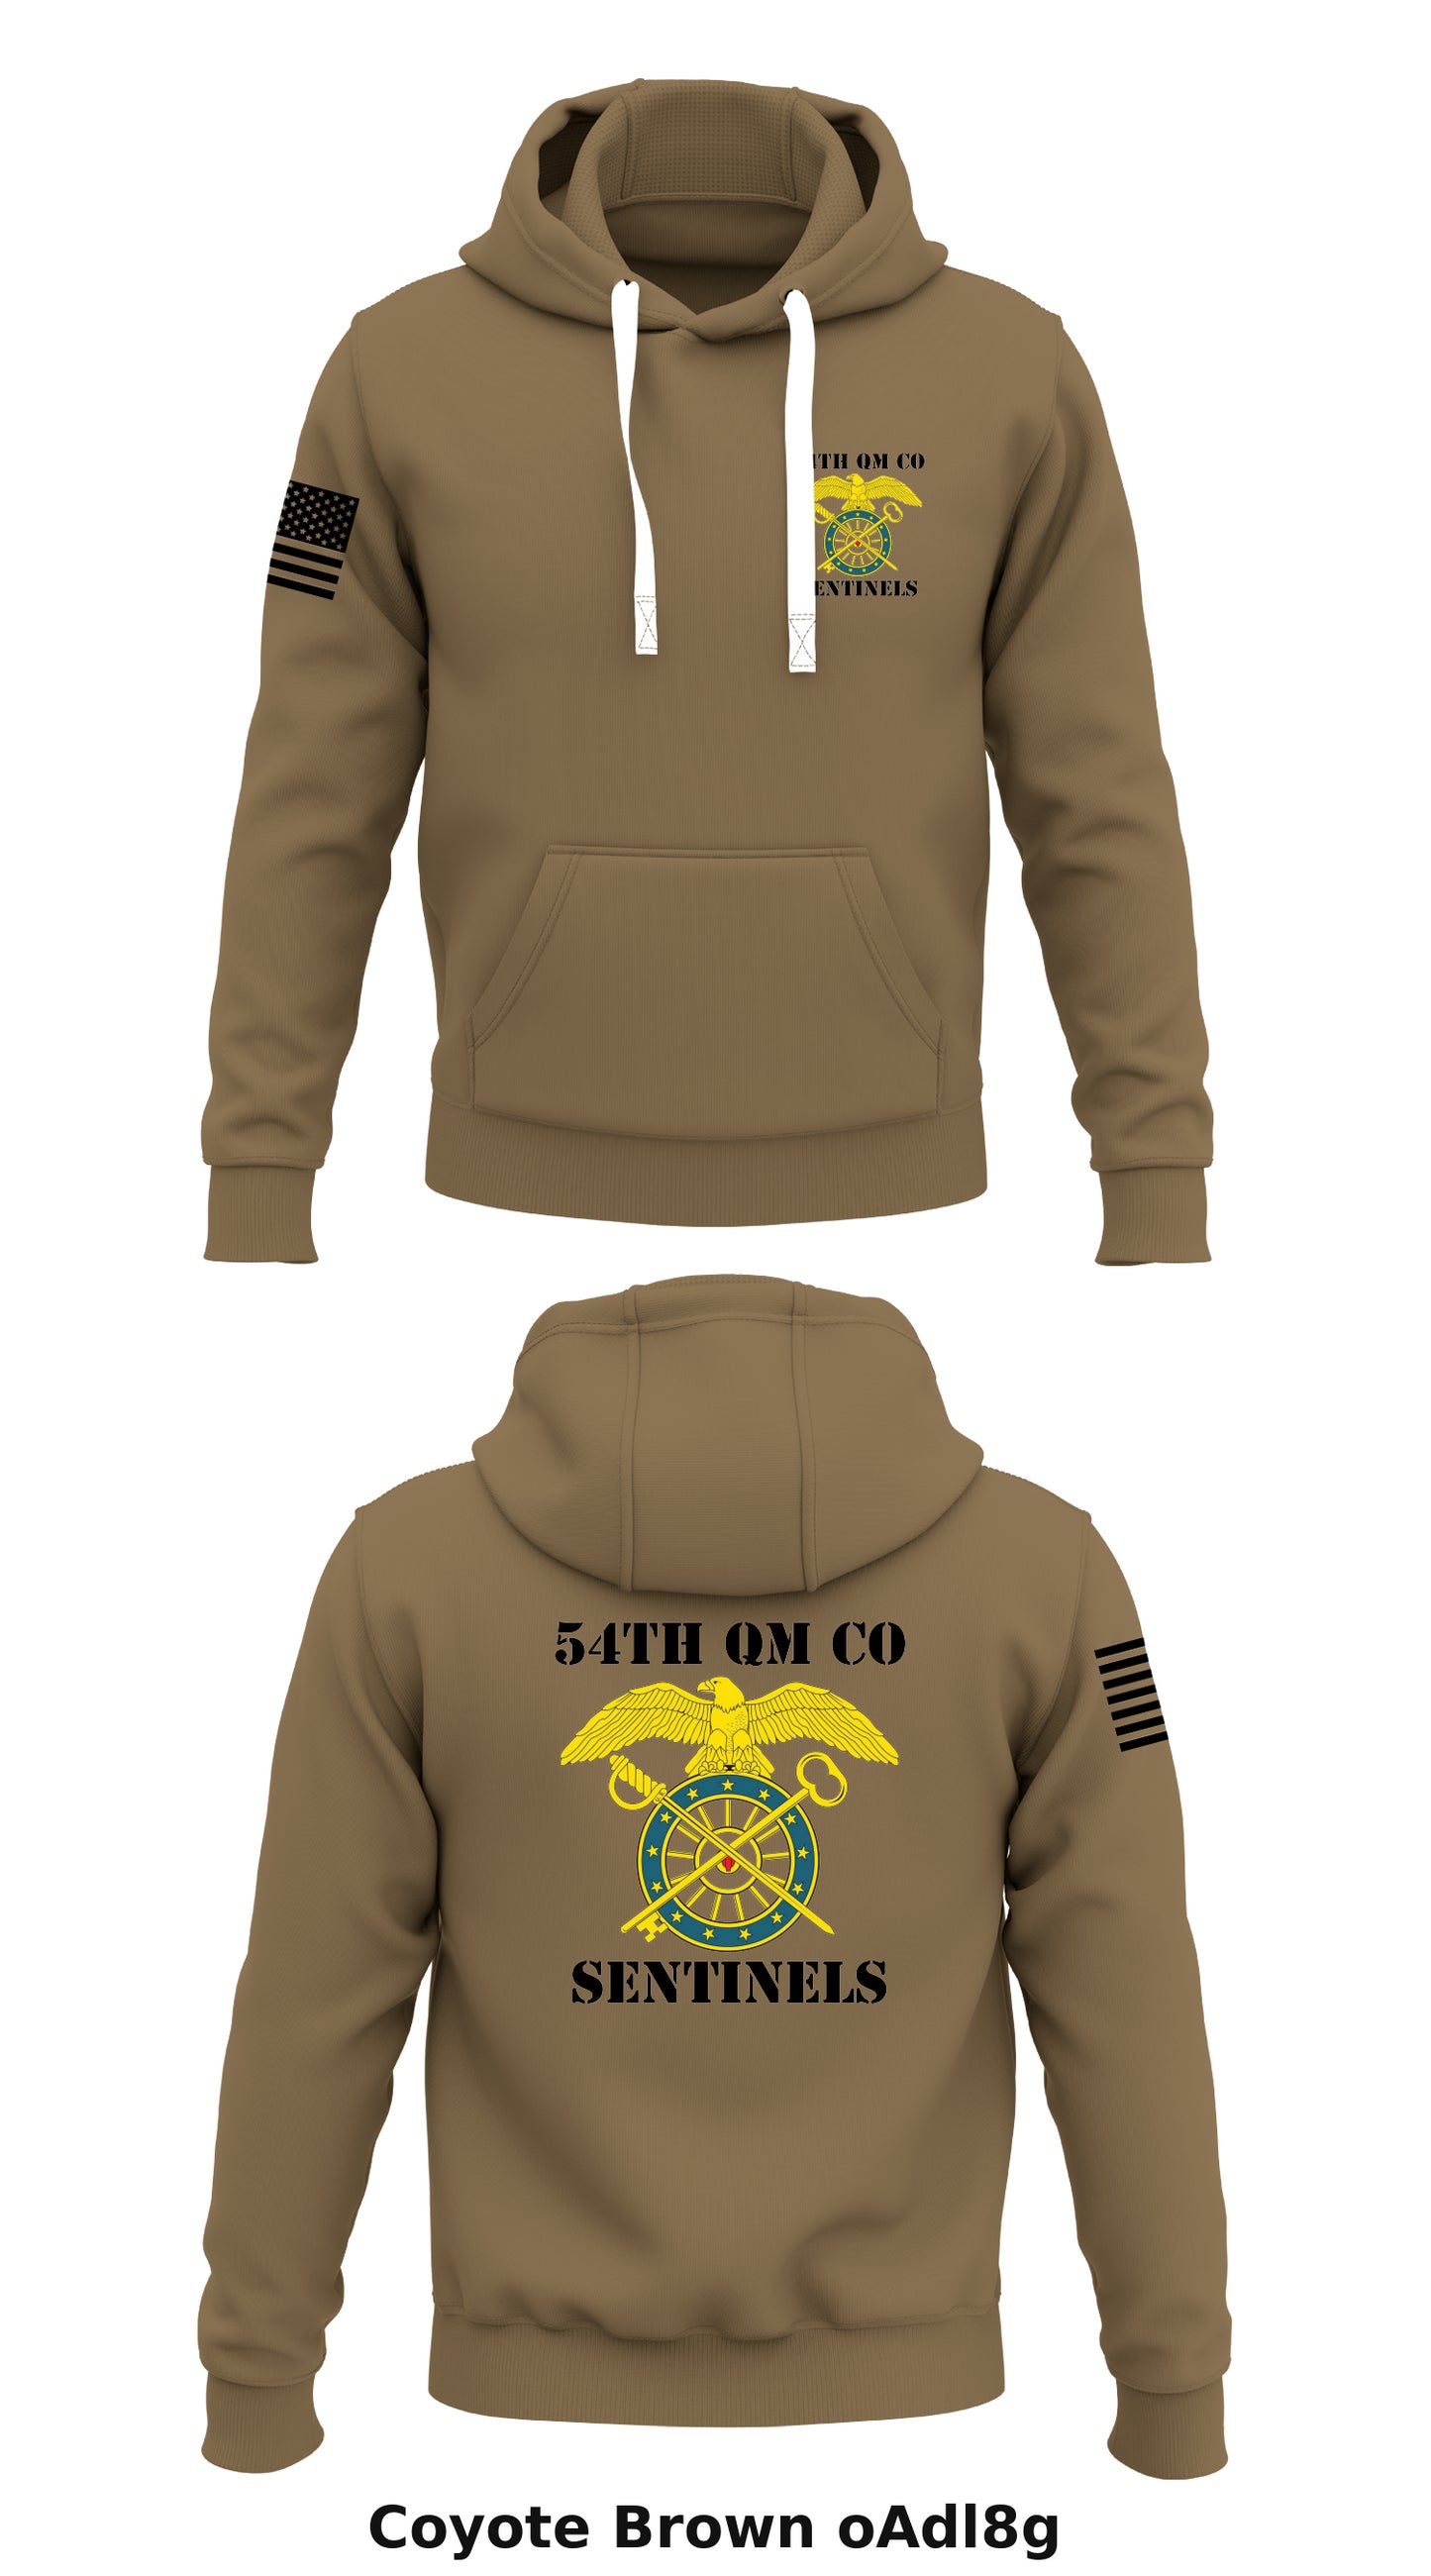 54TH QM CO Sentinels Store 1  Core Men's Hooded Performance Sweatshirt - oAdl8g